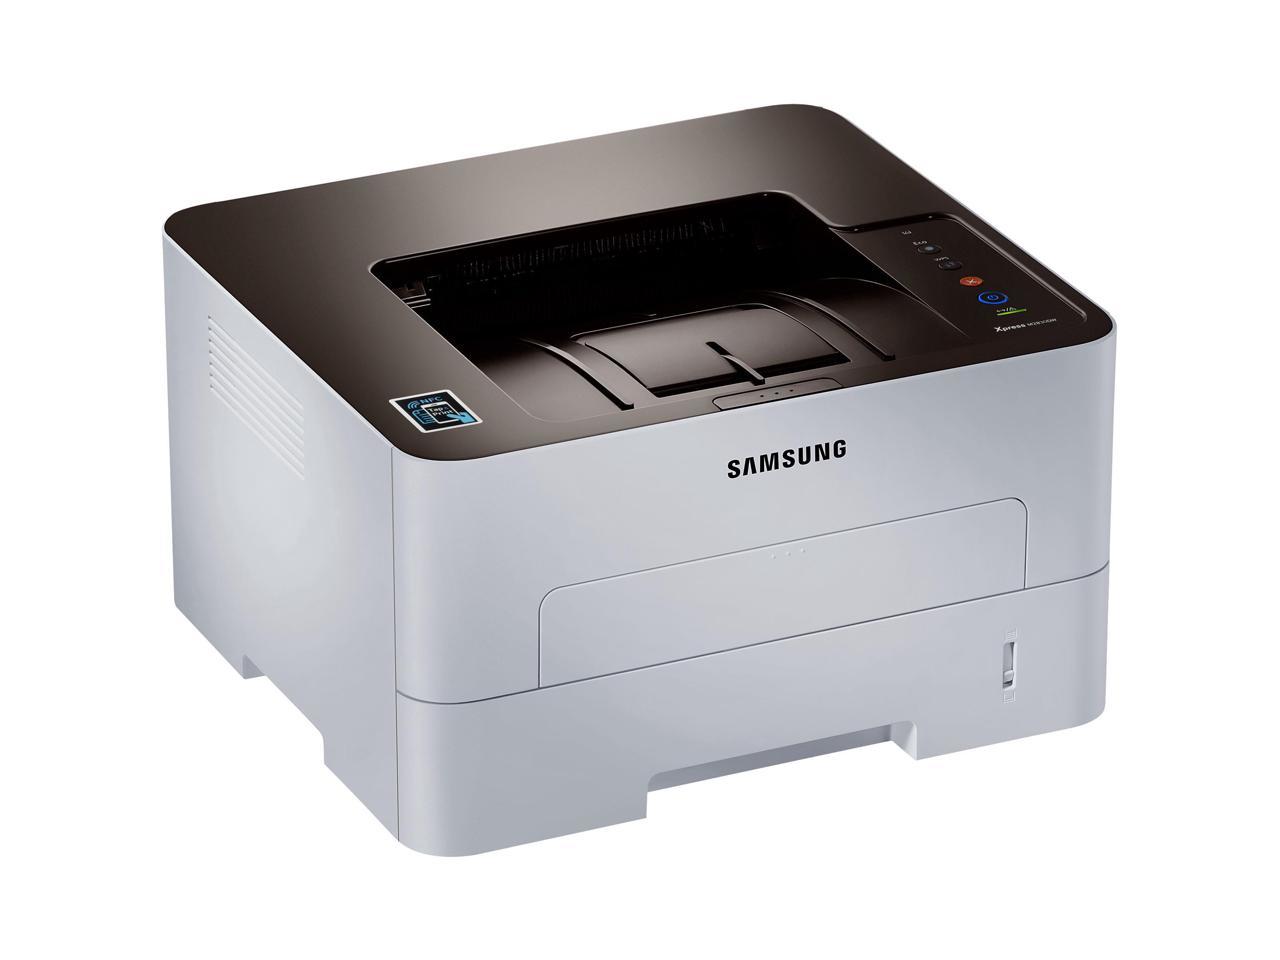 Used - Good: Samsung SL-M2830DW Xpress Mono Laser Printer - Newegg.com